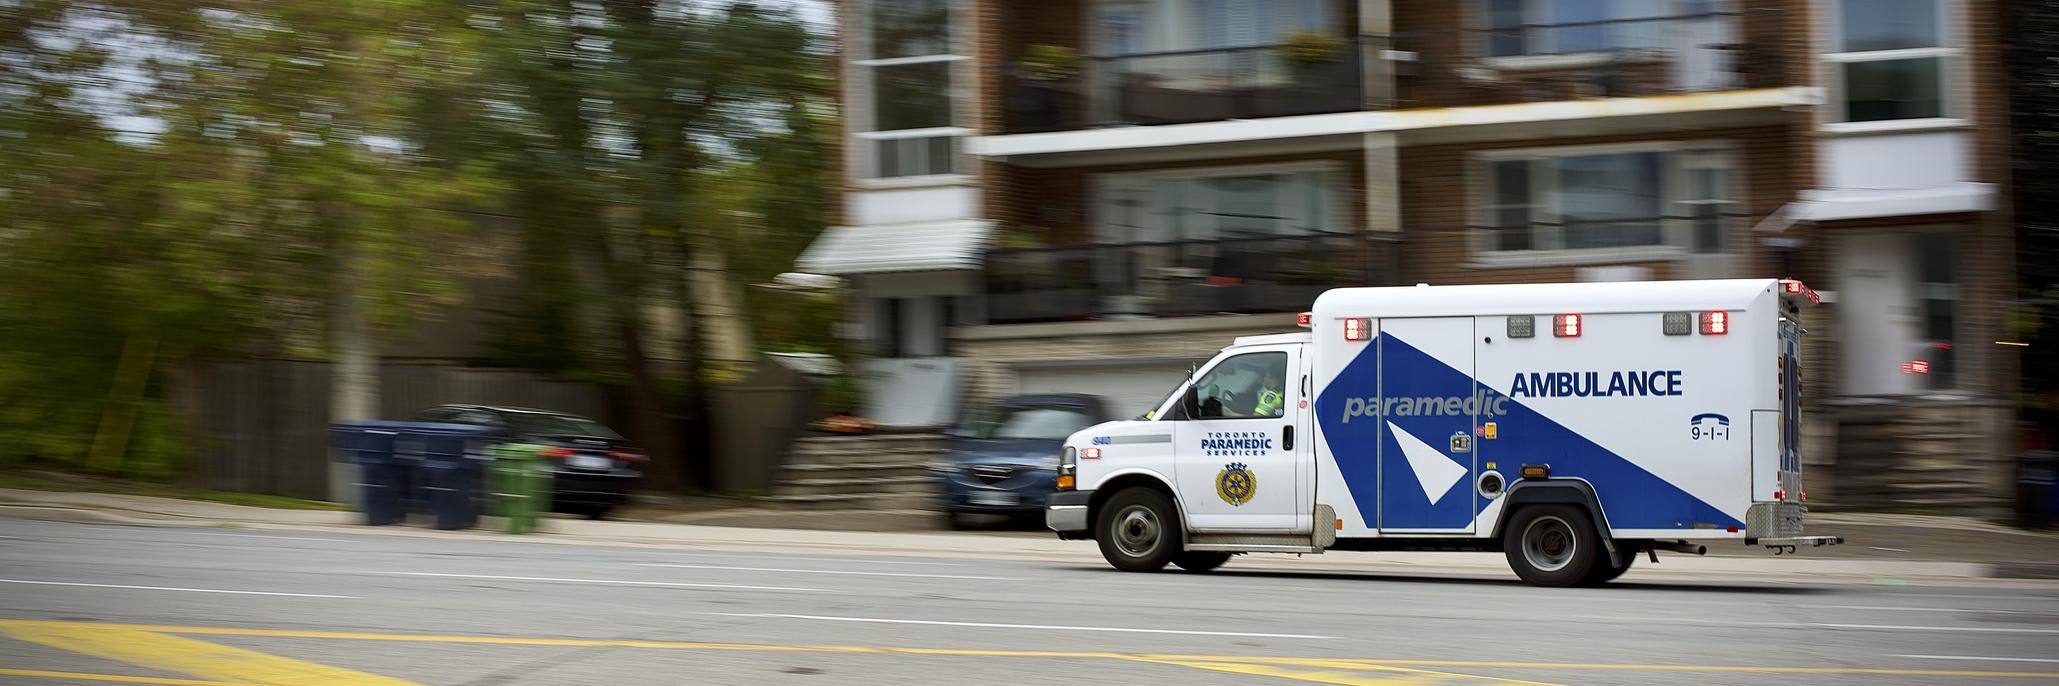 Ambulance driving through Toronto streets